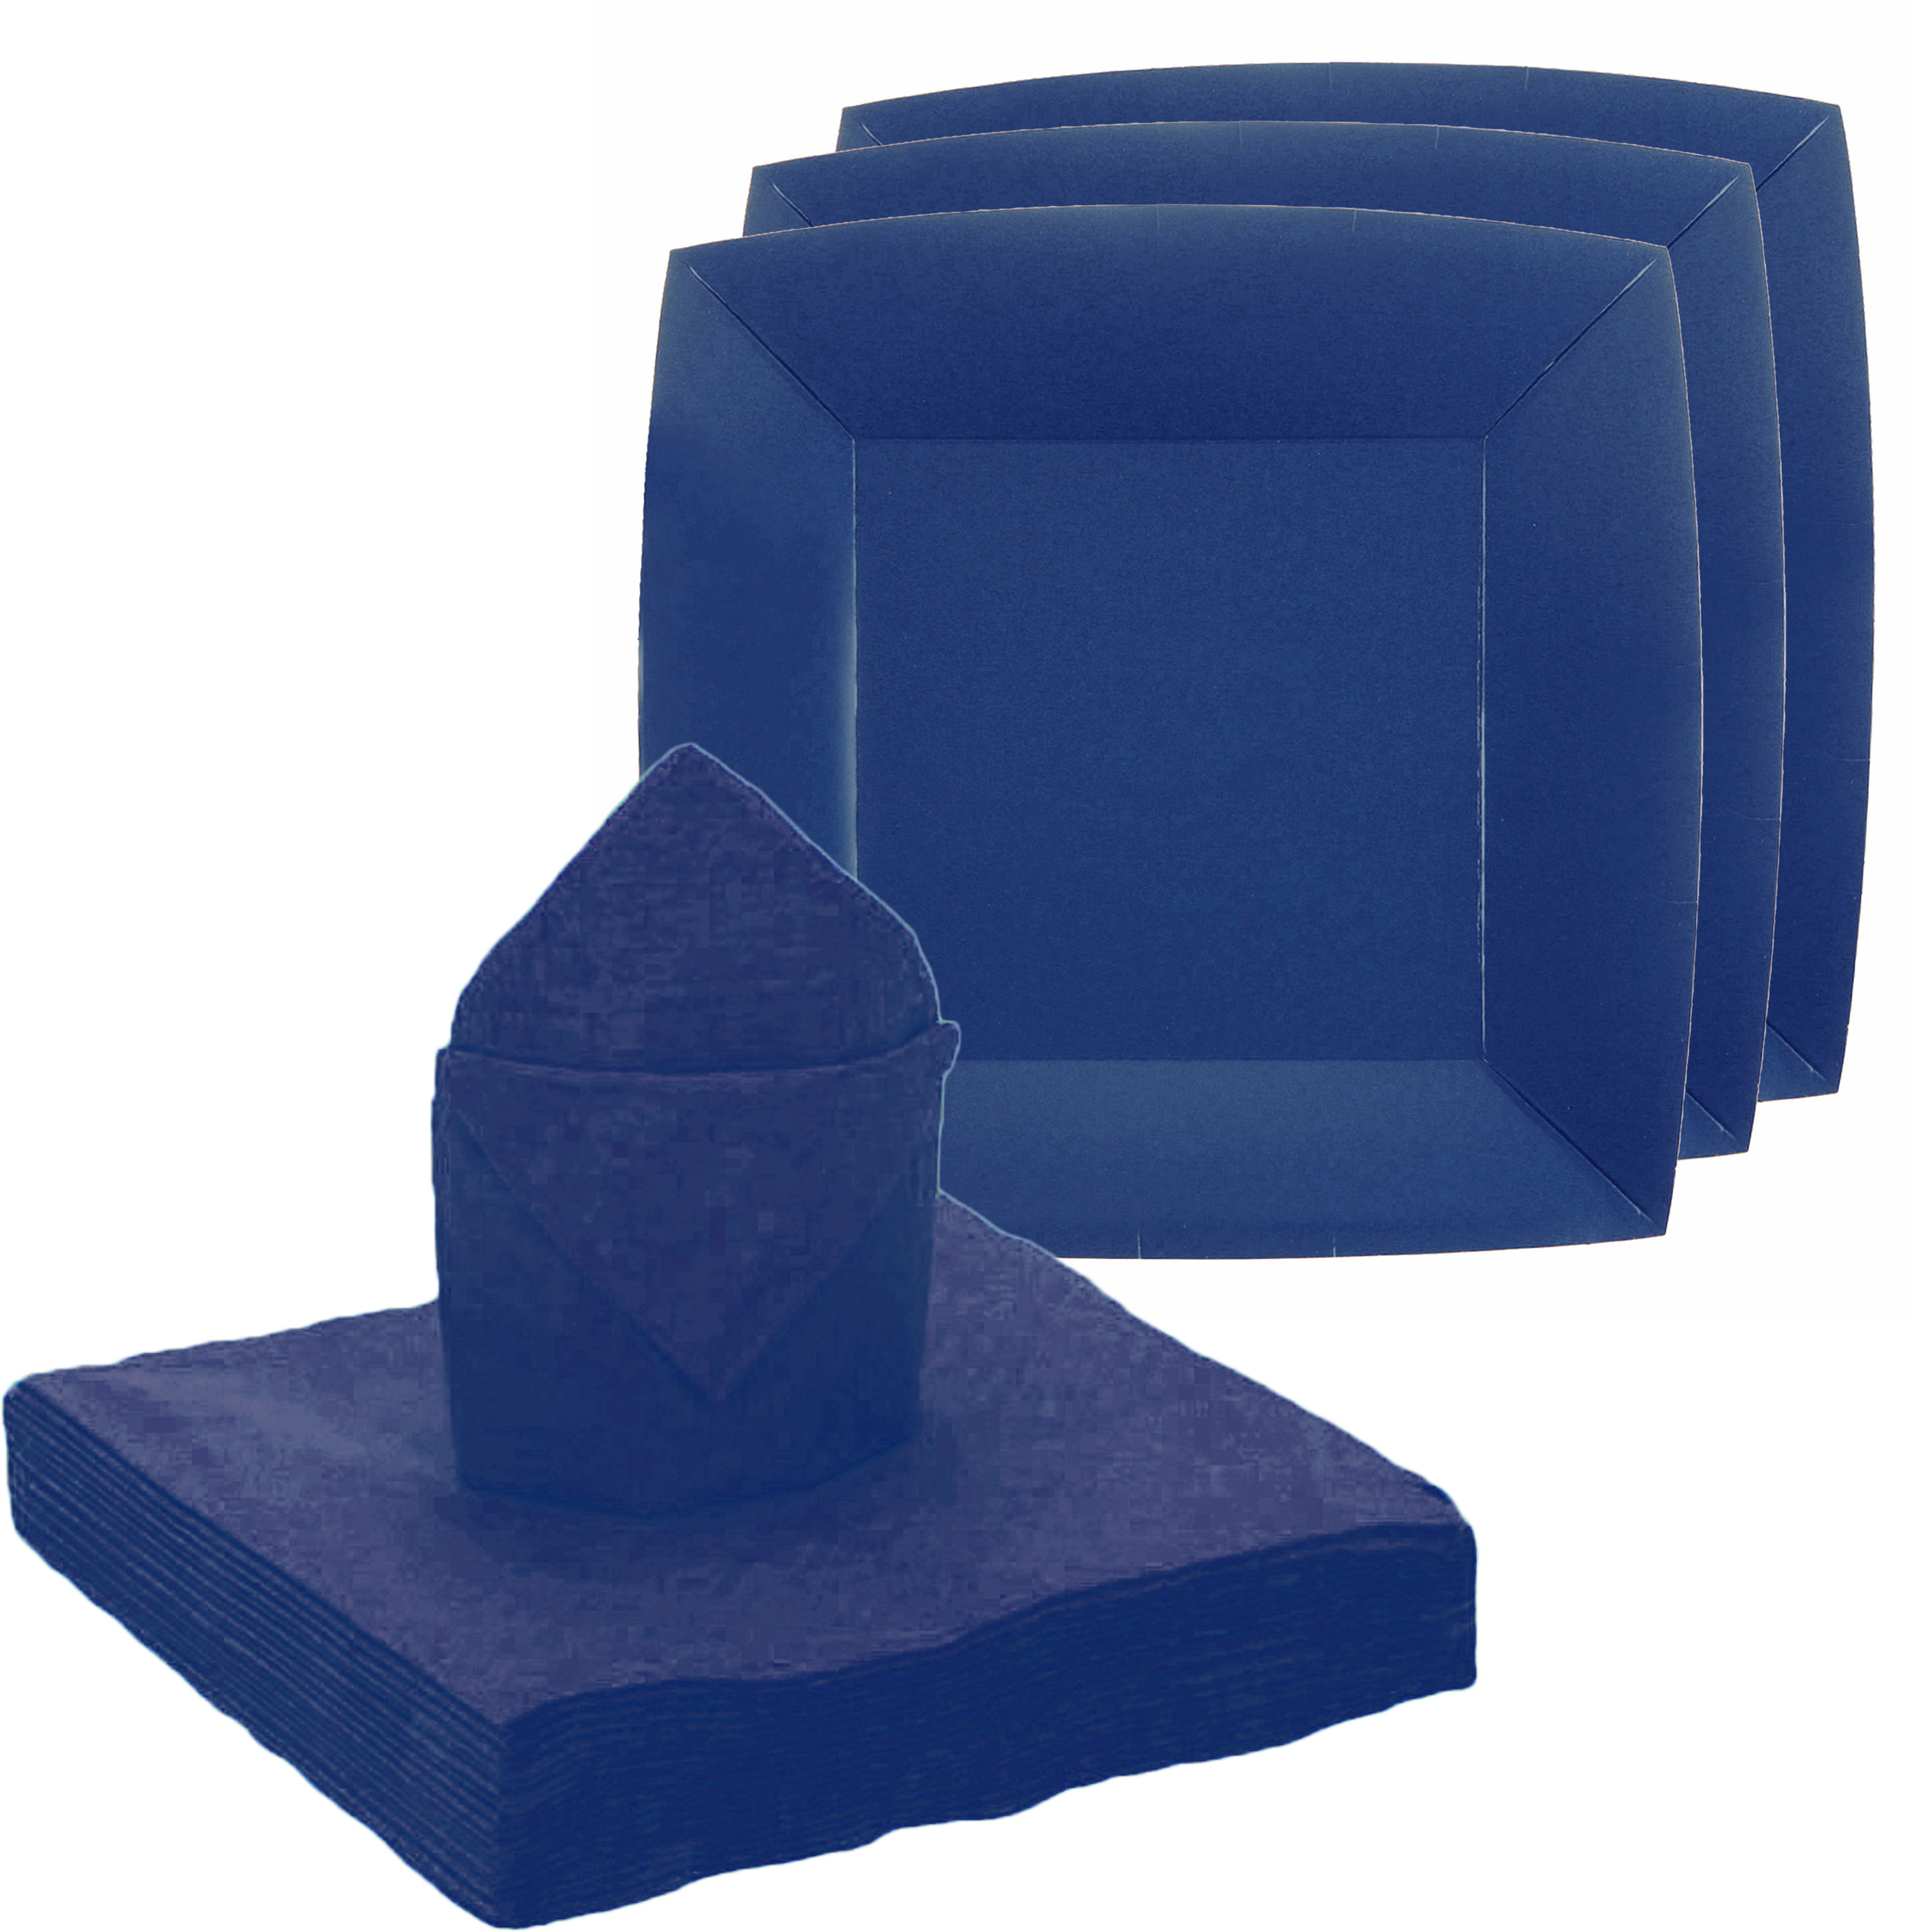 Feest-verjaardag servies set 10x gebaksbordjes-20x servetten kobalt blauw karton